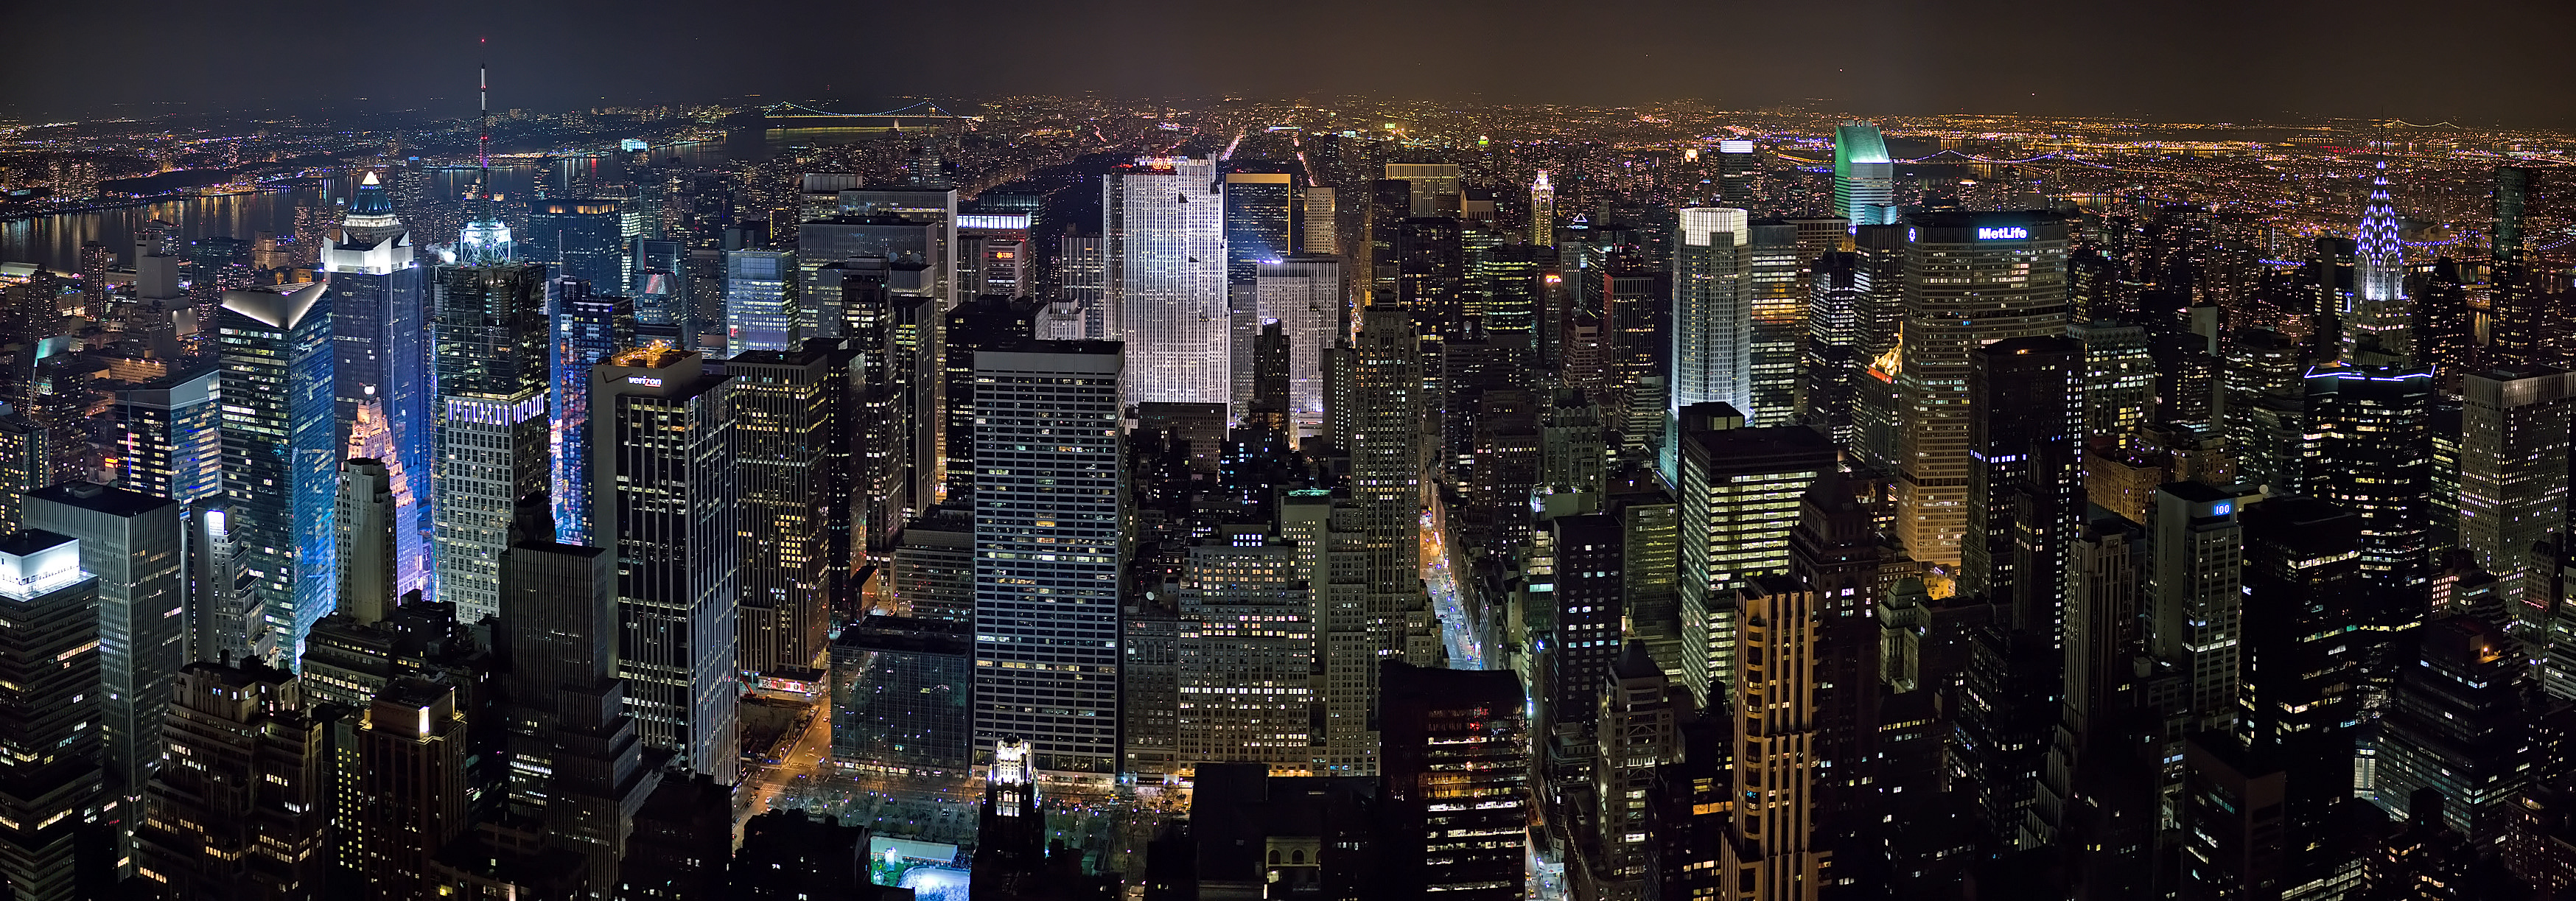 File:New York Midtown Skyline at night - Jan 2006 edit1.jpg - Wikipedia